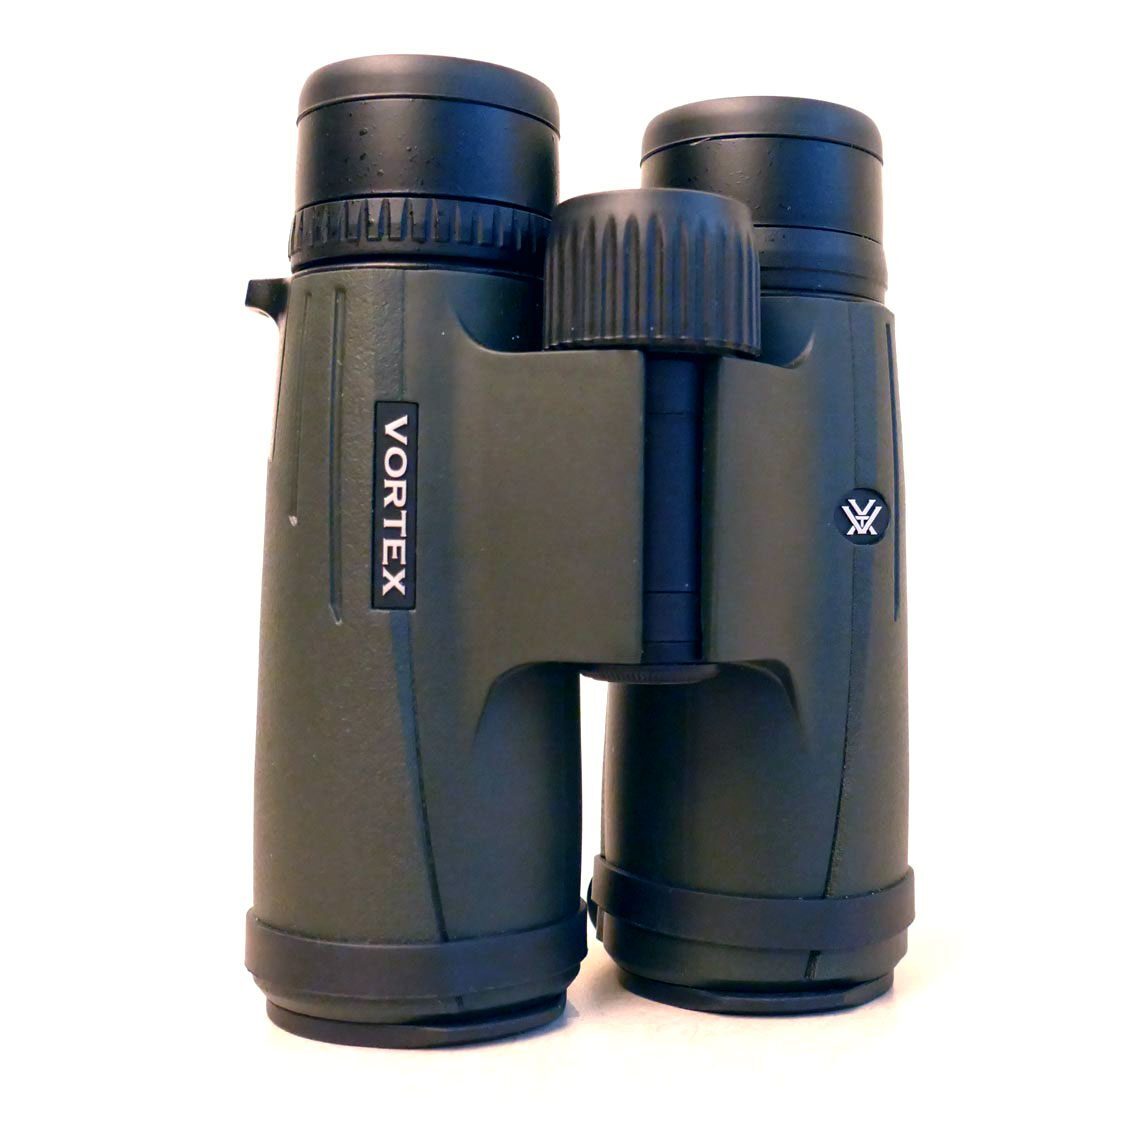 Vortex Viper HD 8x42 Binoculars: Our Review